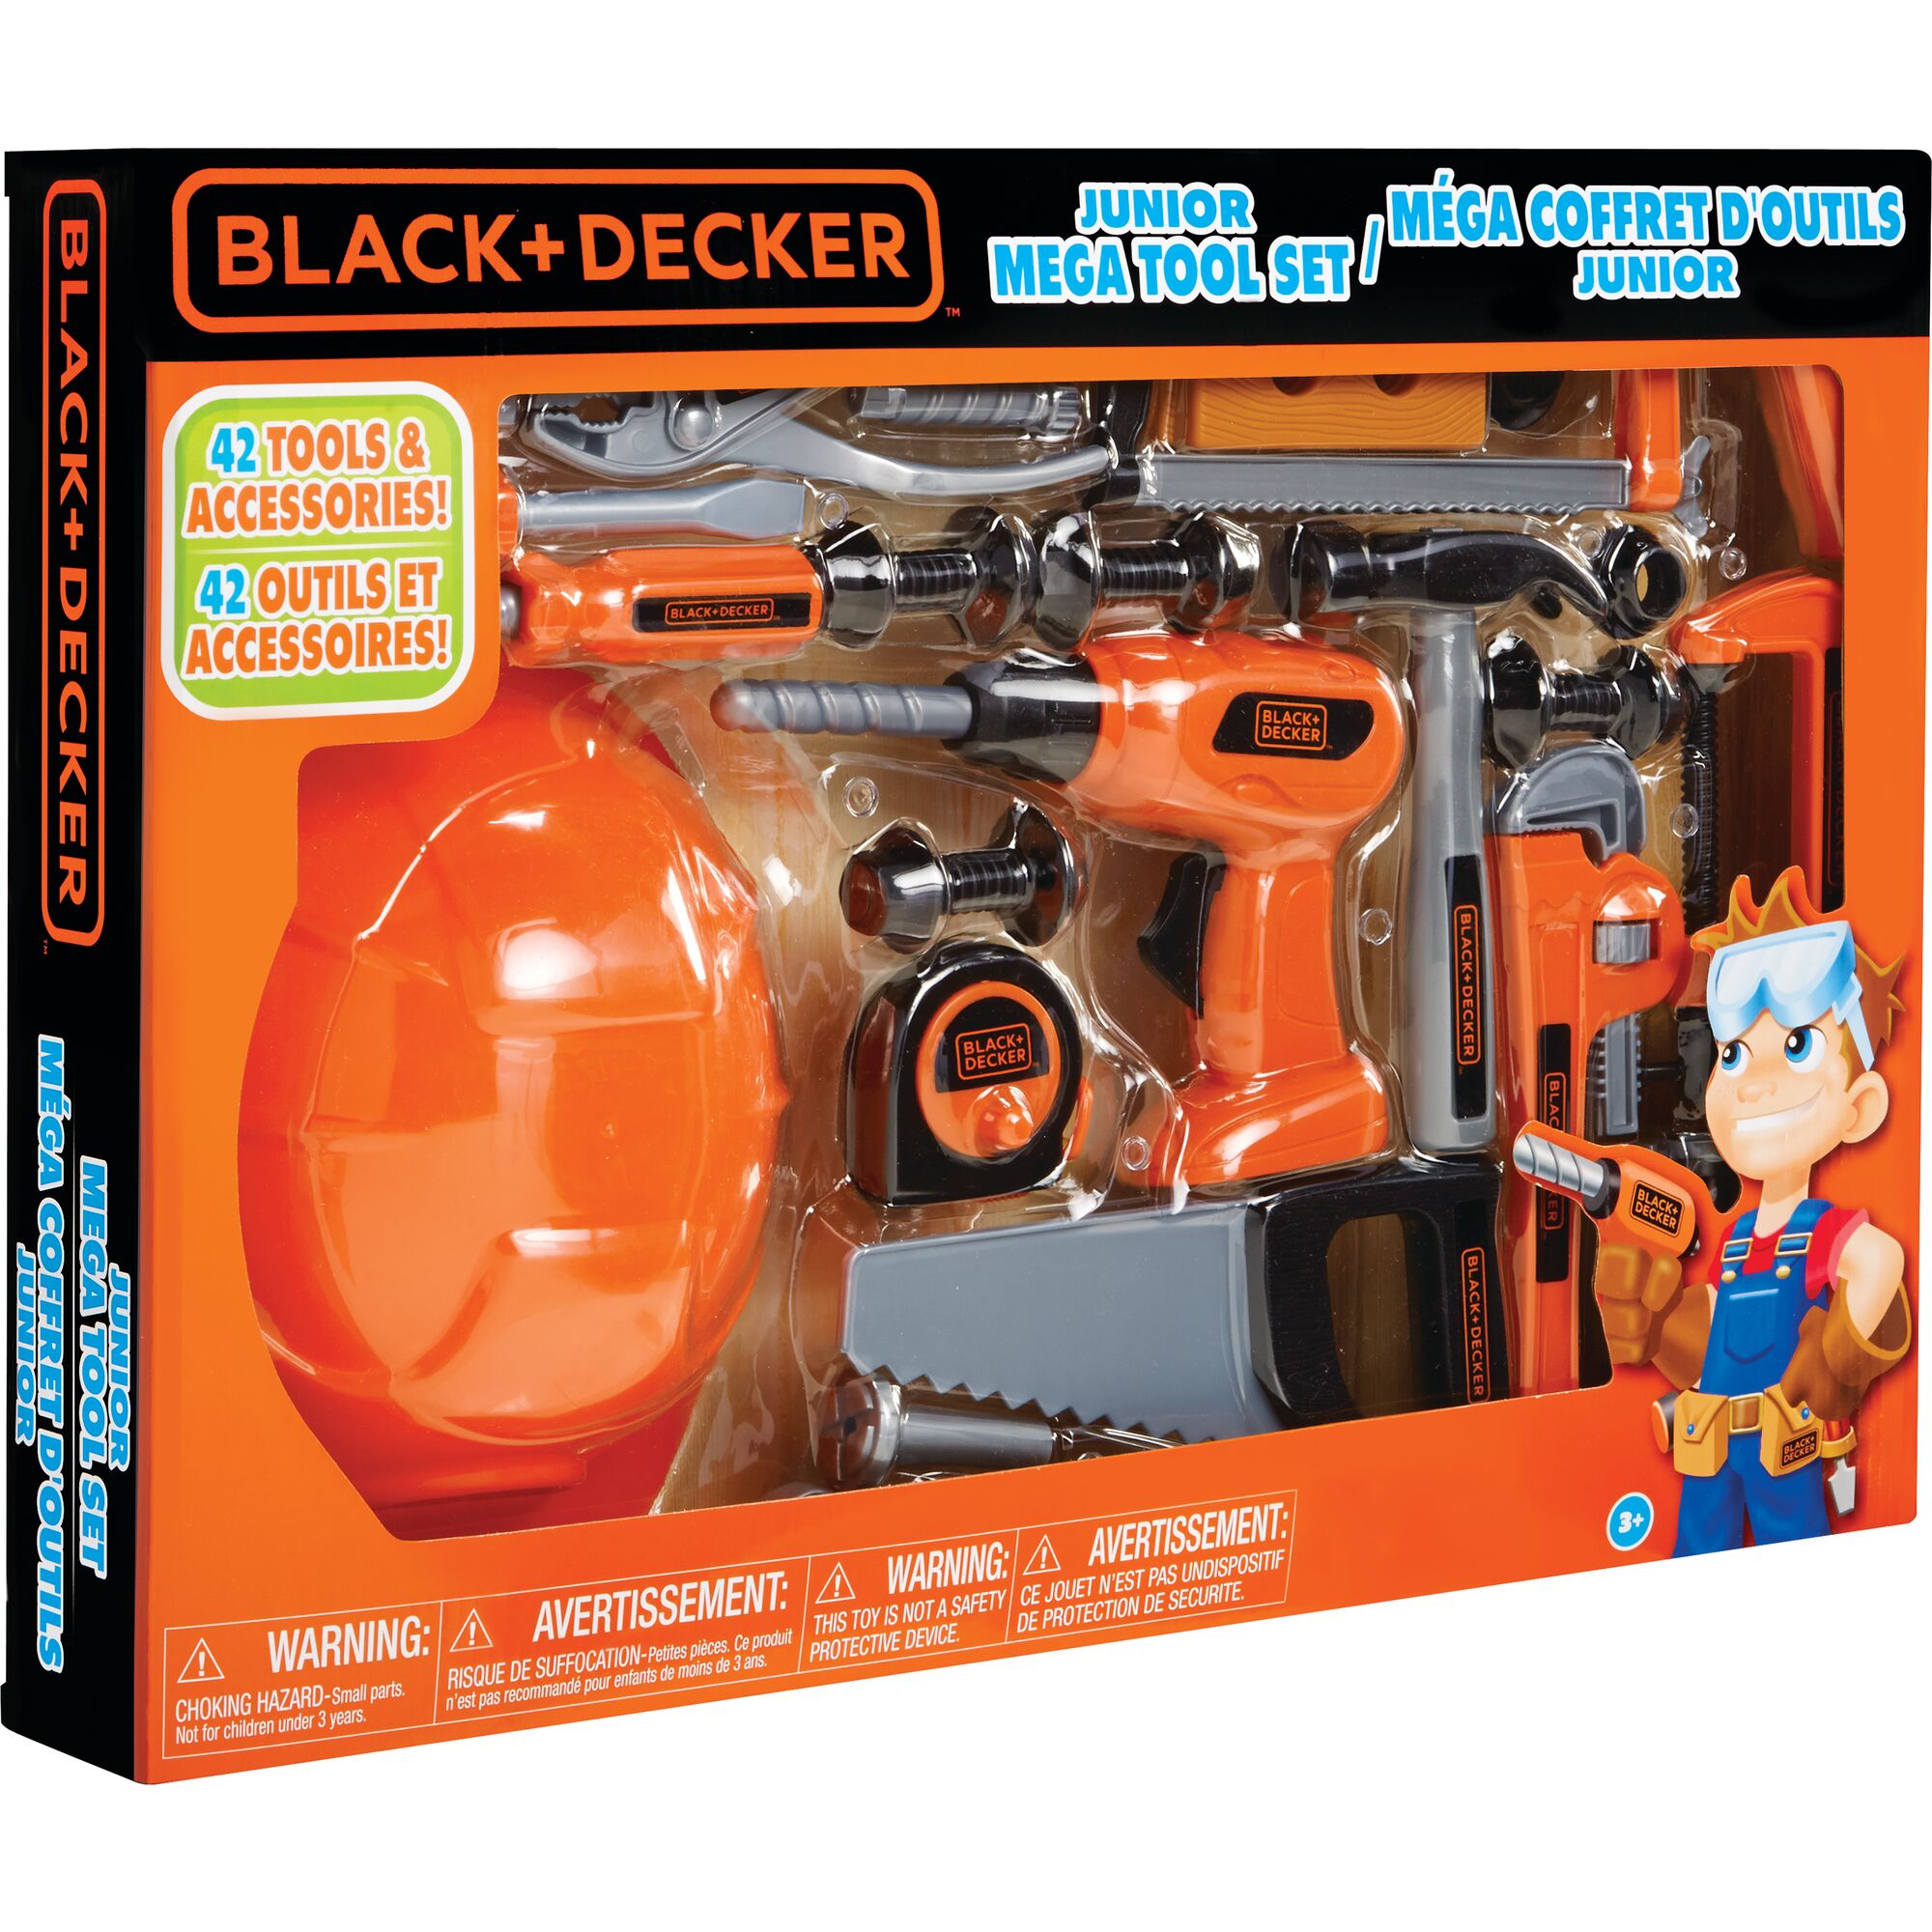 Black & Decker Tool Set, Black & Decker Junior